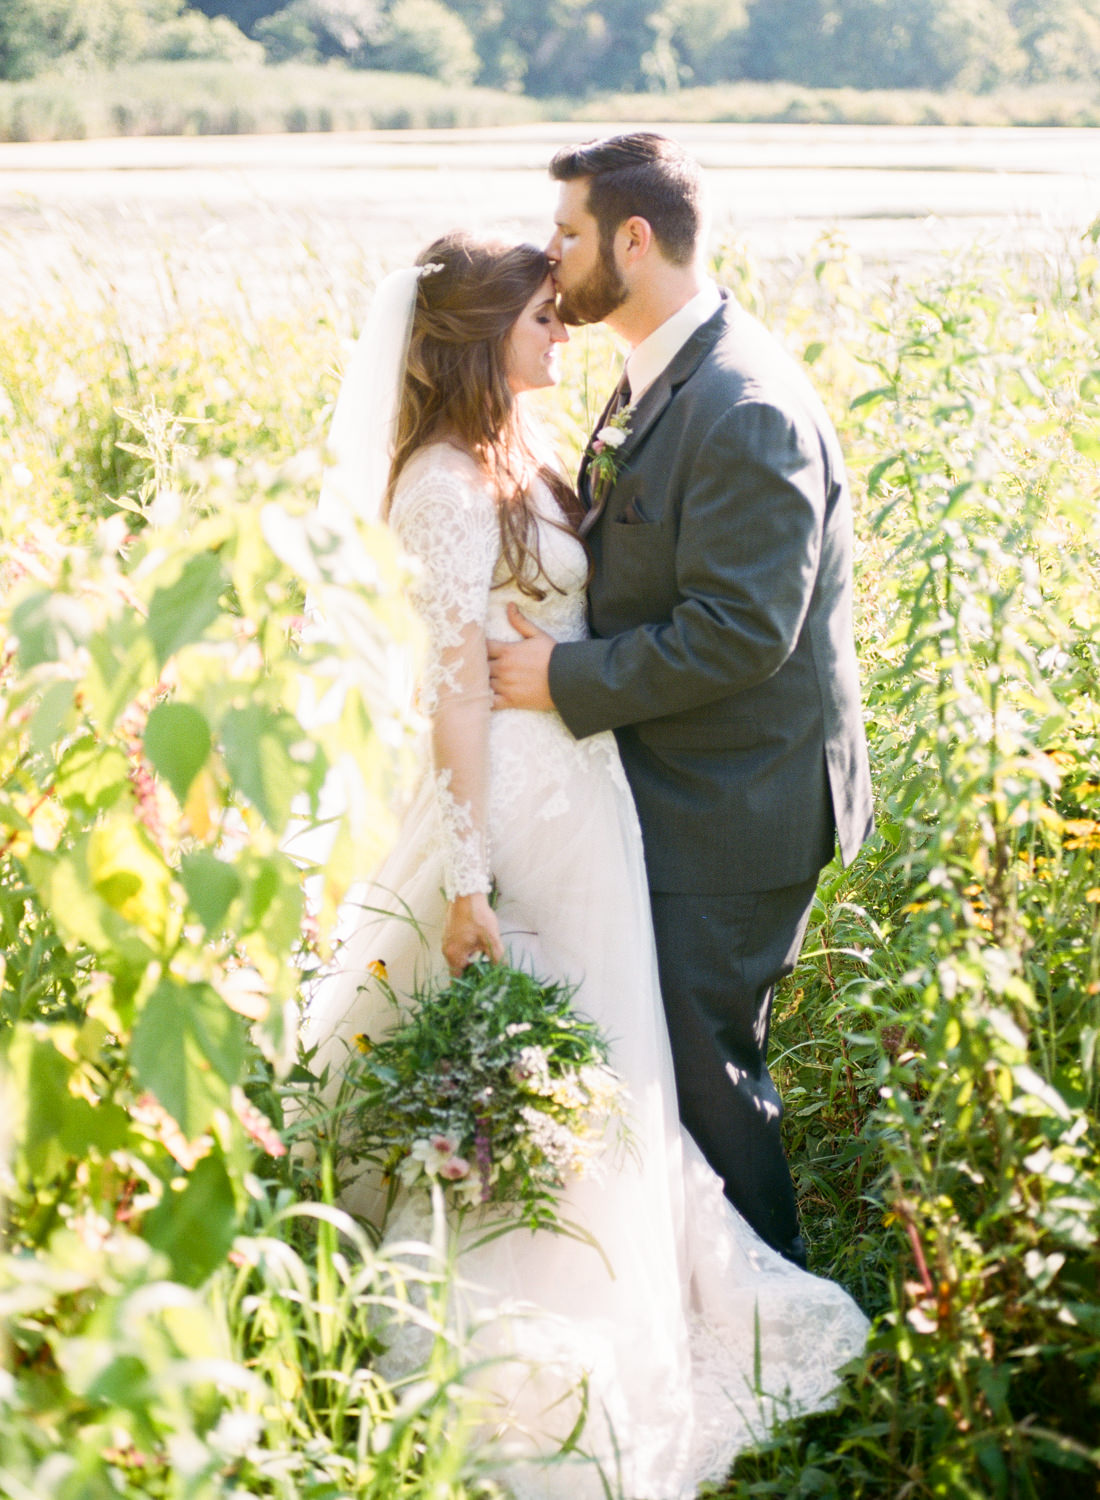 Groom kissing bride in field; St. Louis fine art film wedding photographer Erica Robnett Photography